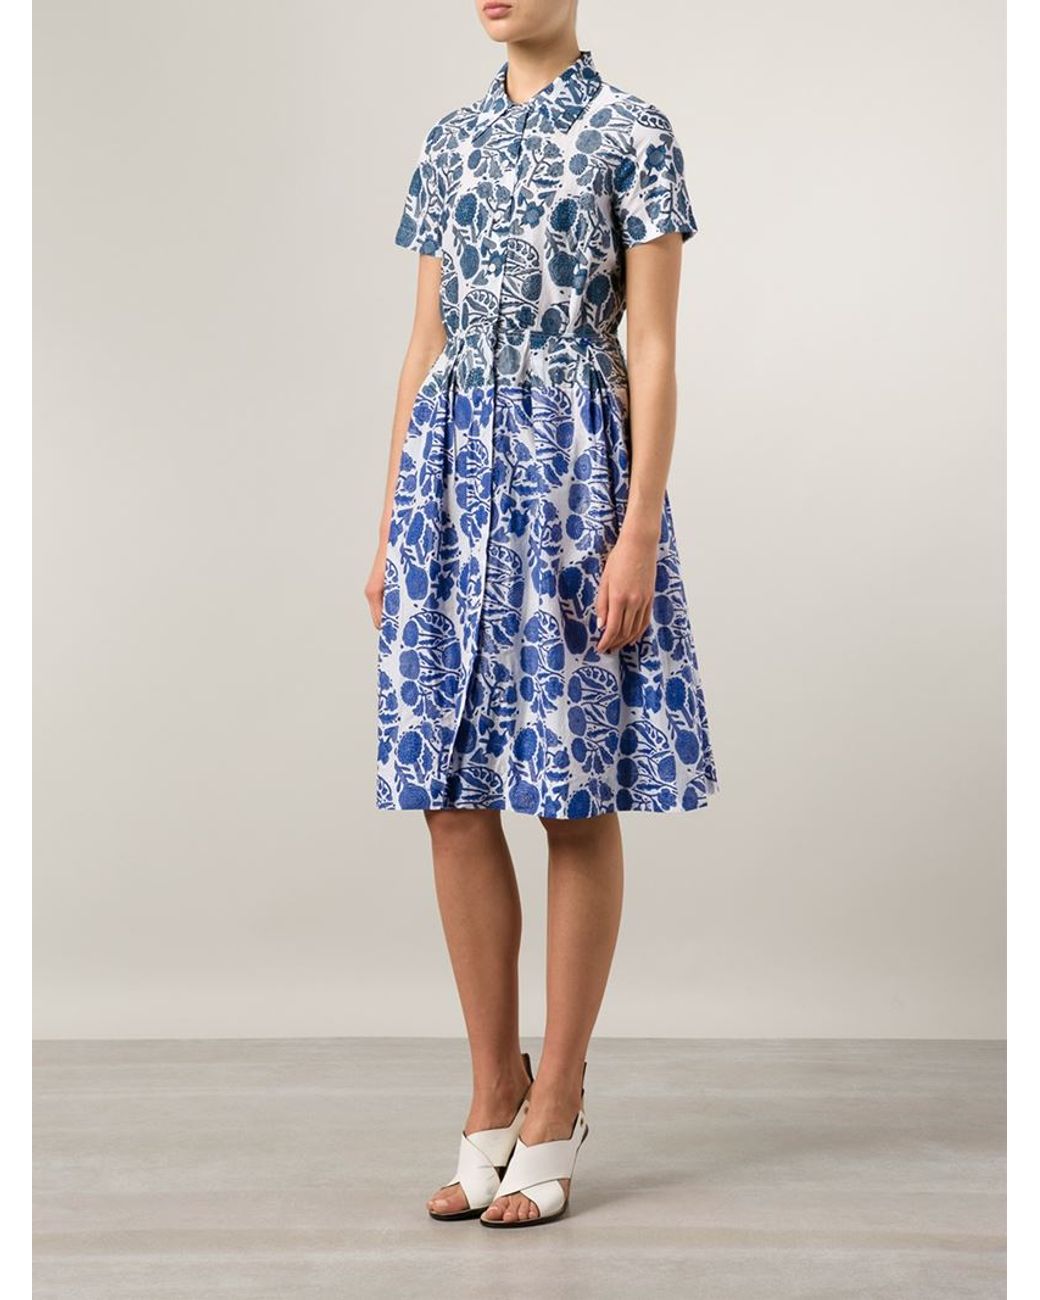 Dosa Floral Print Shirt Dress in Blue | Lyst